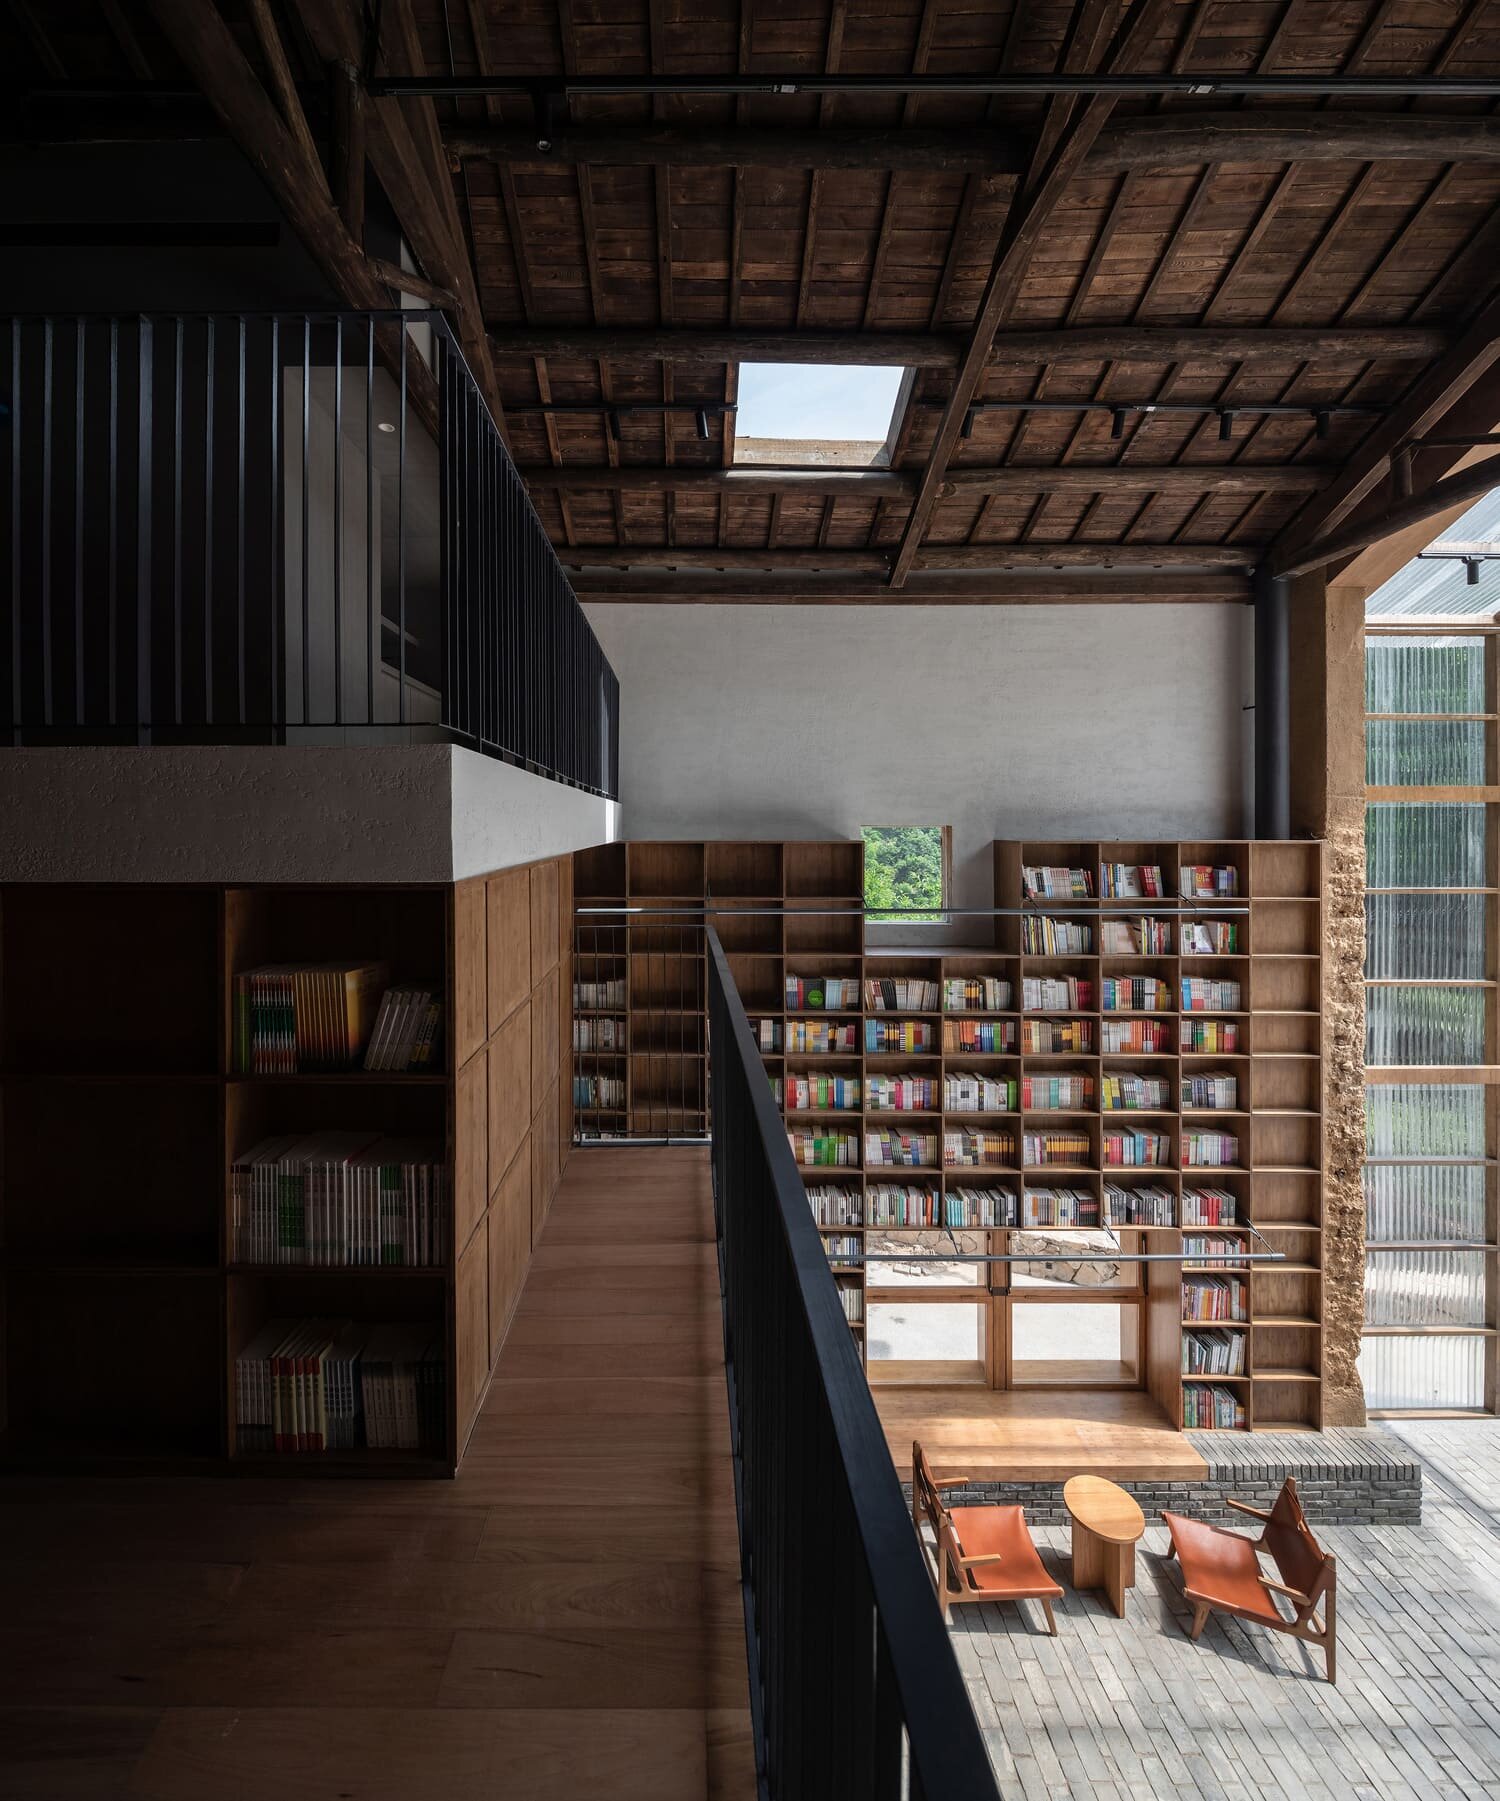 tao+c-Bookstore-Su Sheng Liang-Visual Atelier 8-Architecture-7.jpg